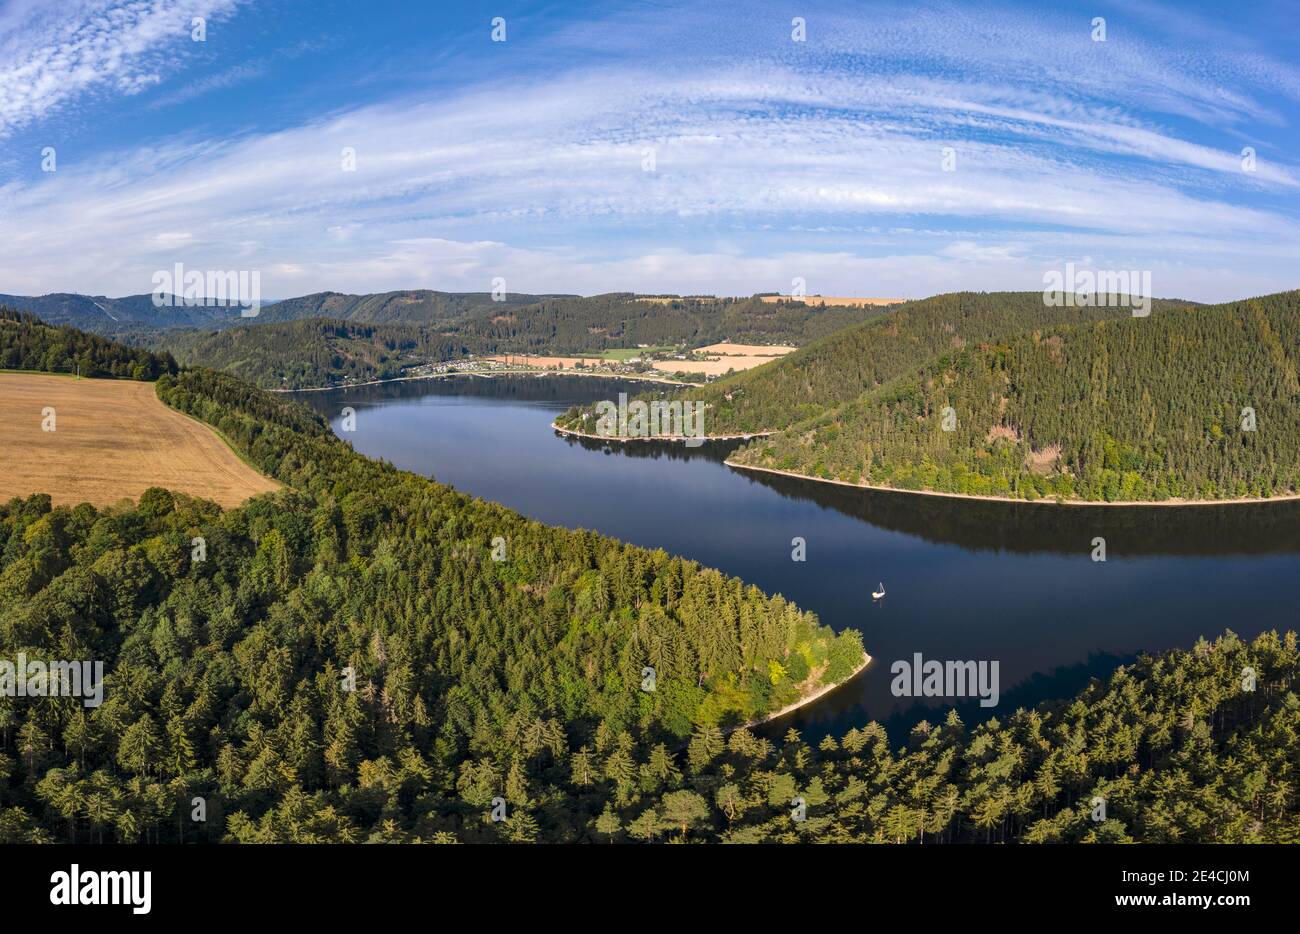 Germany, Thuringia, Neidenberga, Hohenwartestausee, landscape, aerial ...